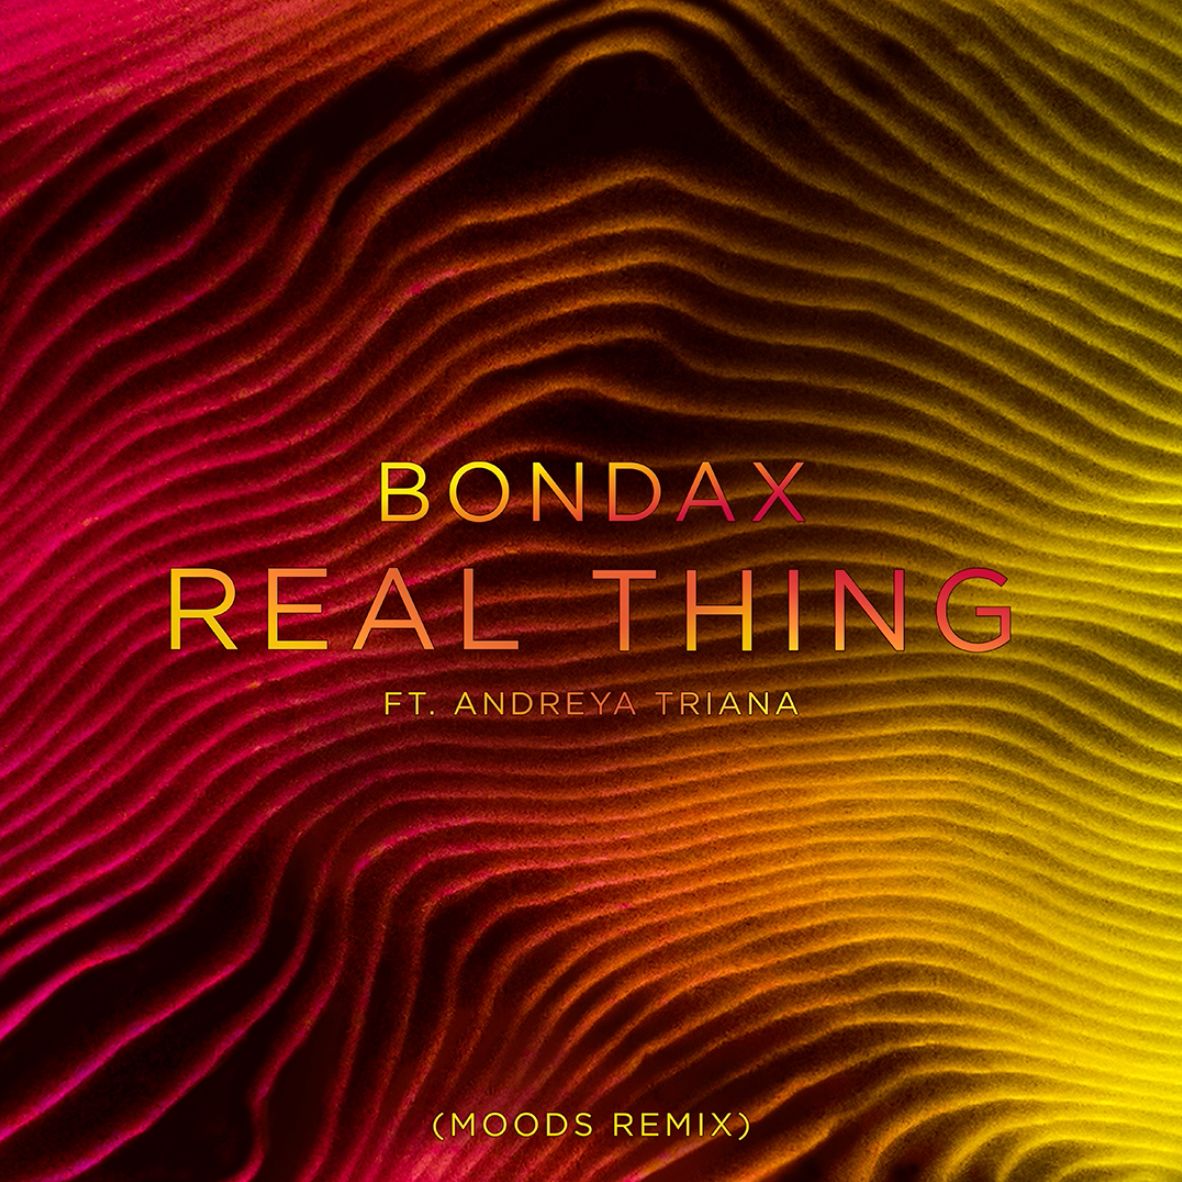 Скачать Bondax - Real Thing ft. Andreya Triana (Moods Remix)